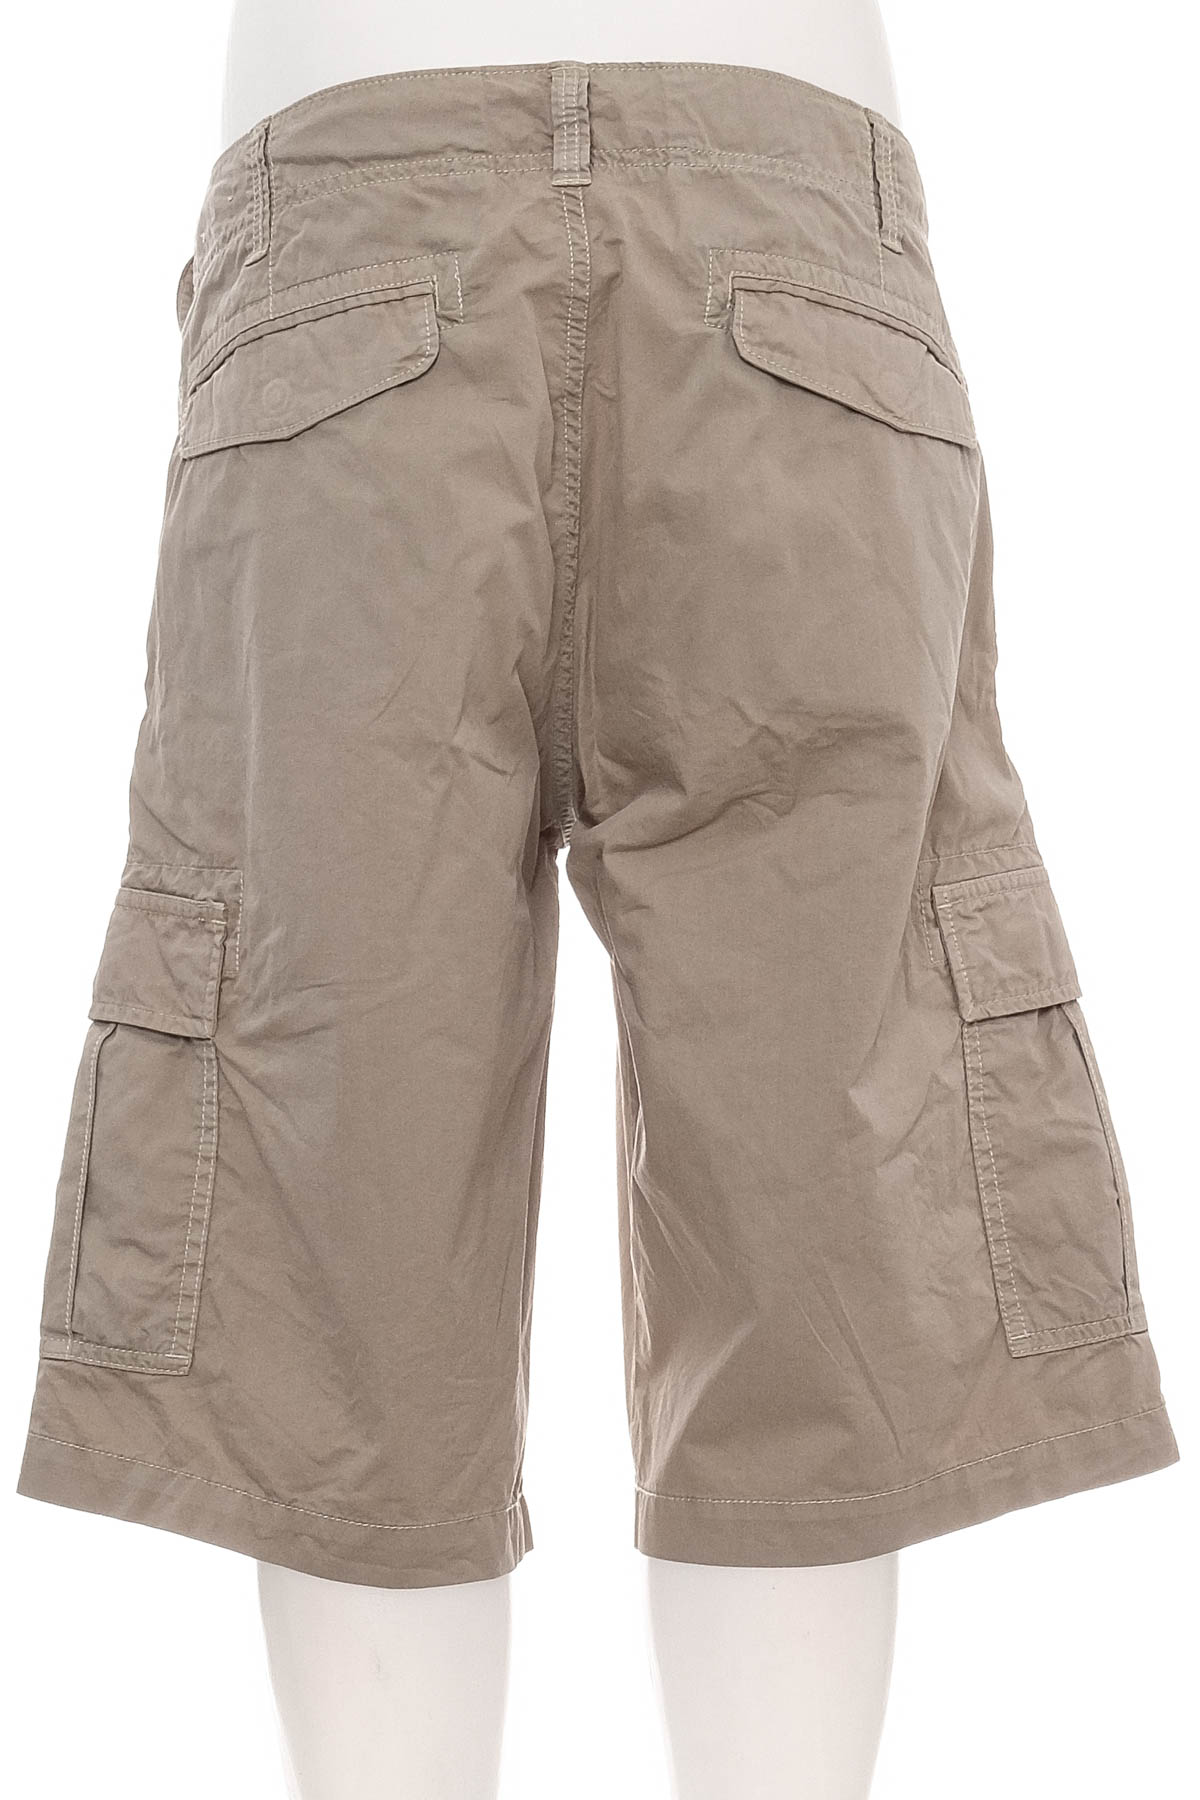 Men's shorts - MCS - 1